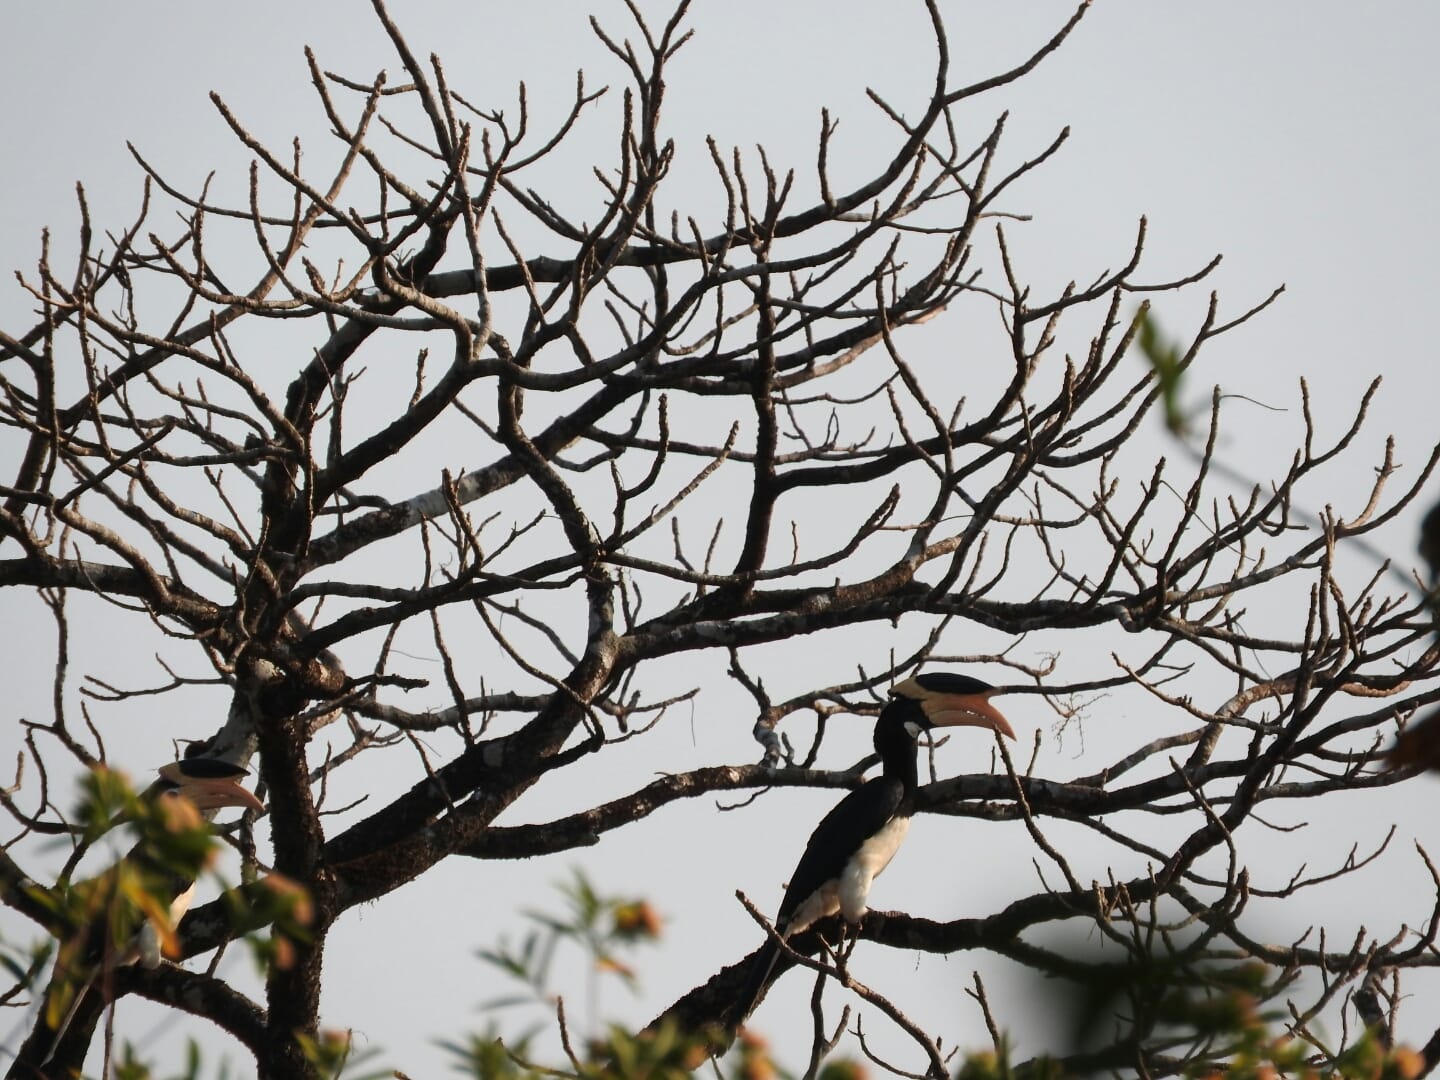 hornbills spotted in bhimgad forest